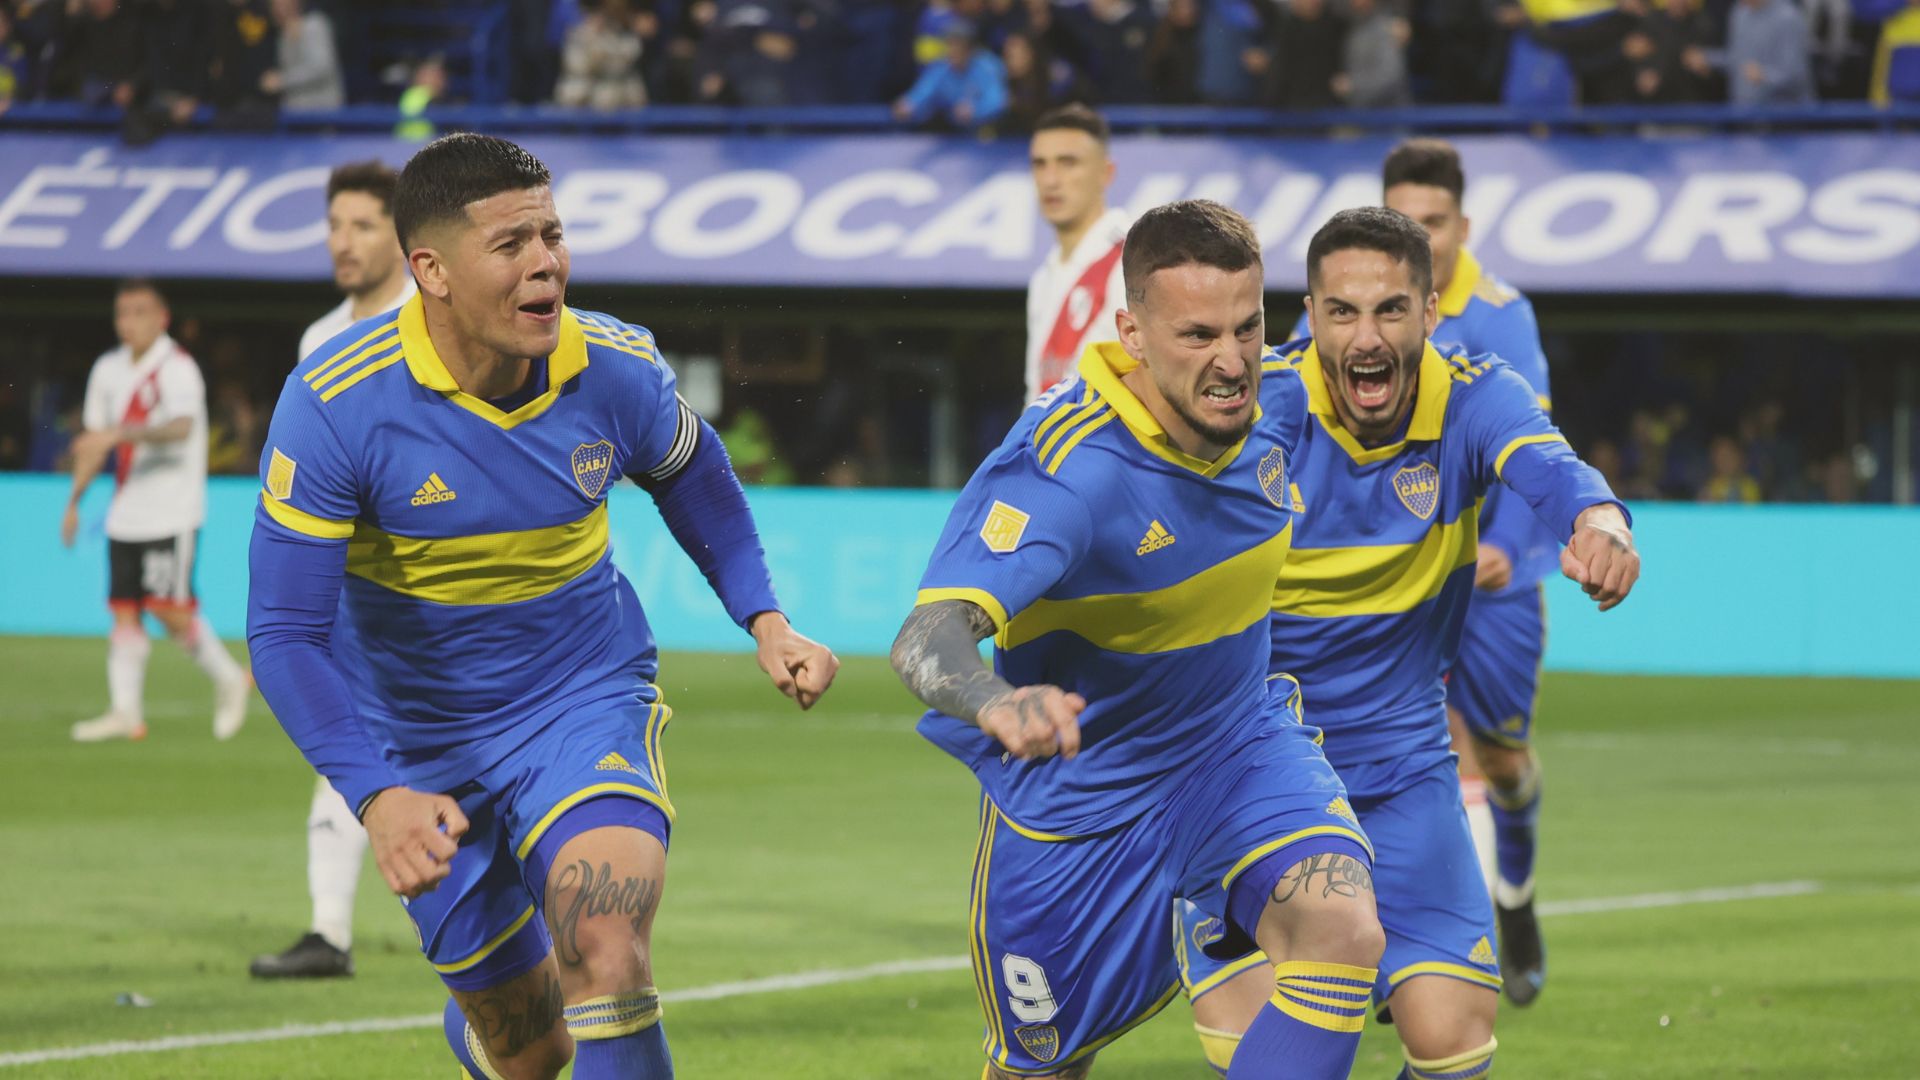 Boca Juniors vs River Plate 1-0: resumen gol de Darío Benedetto de la victoria 'xeneize' en superclásico argentino - Infobae